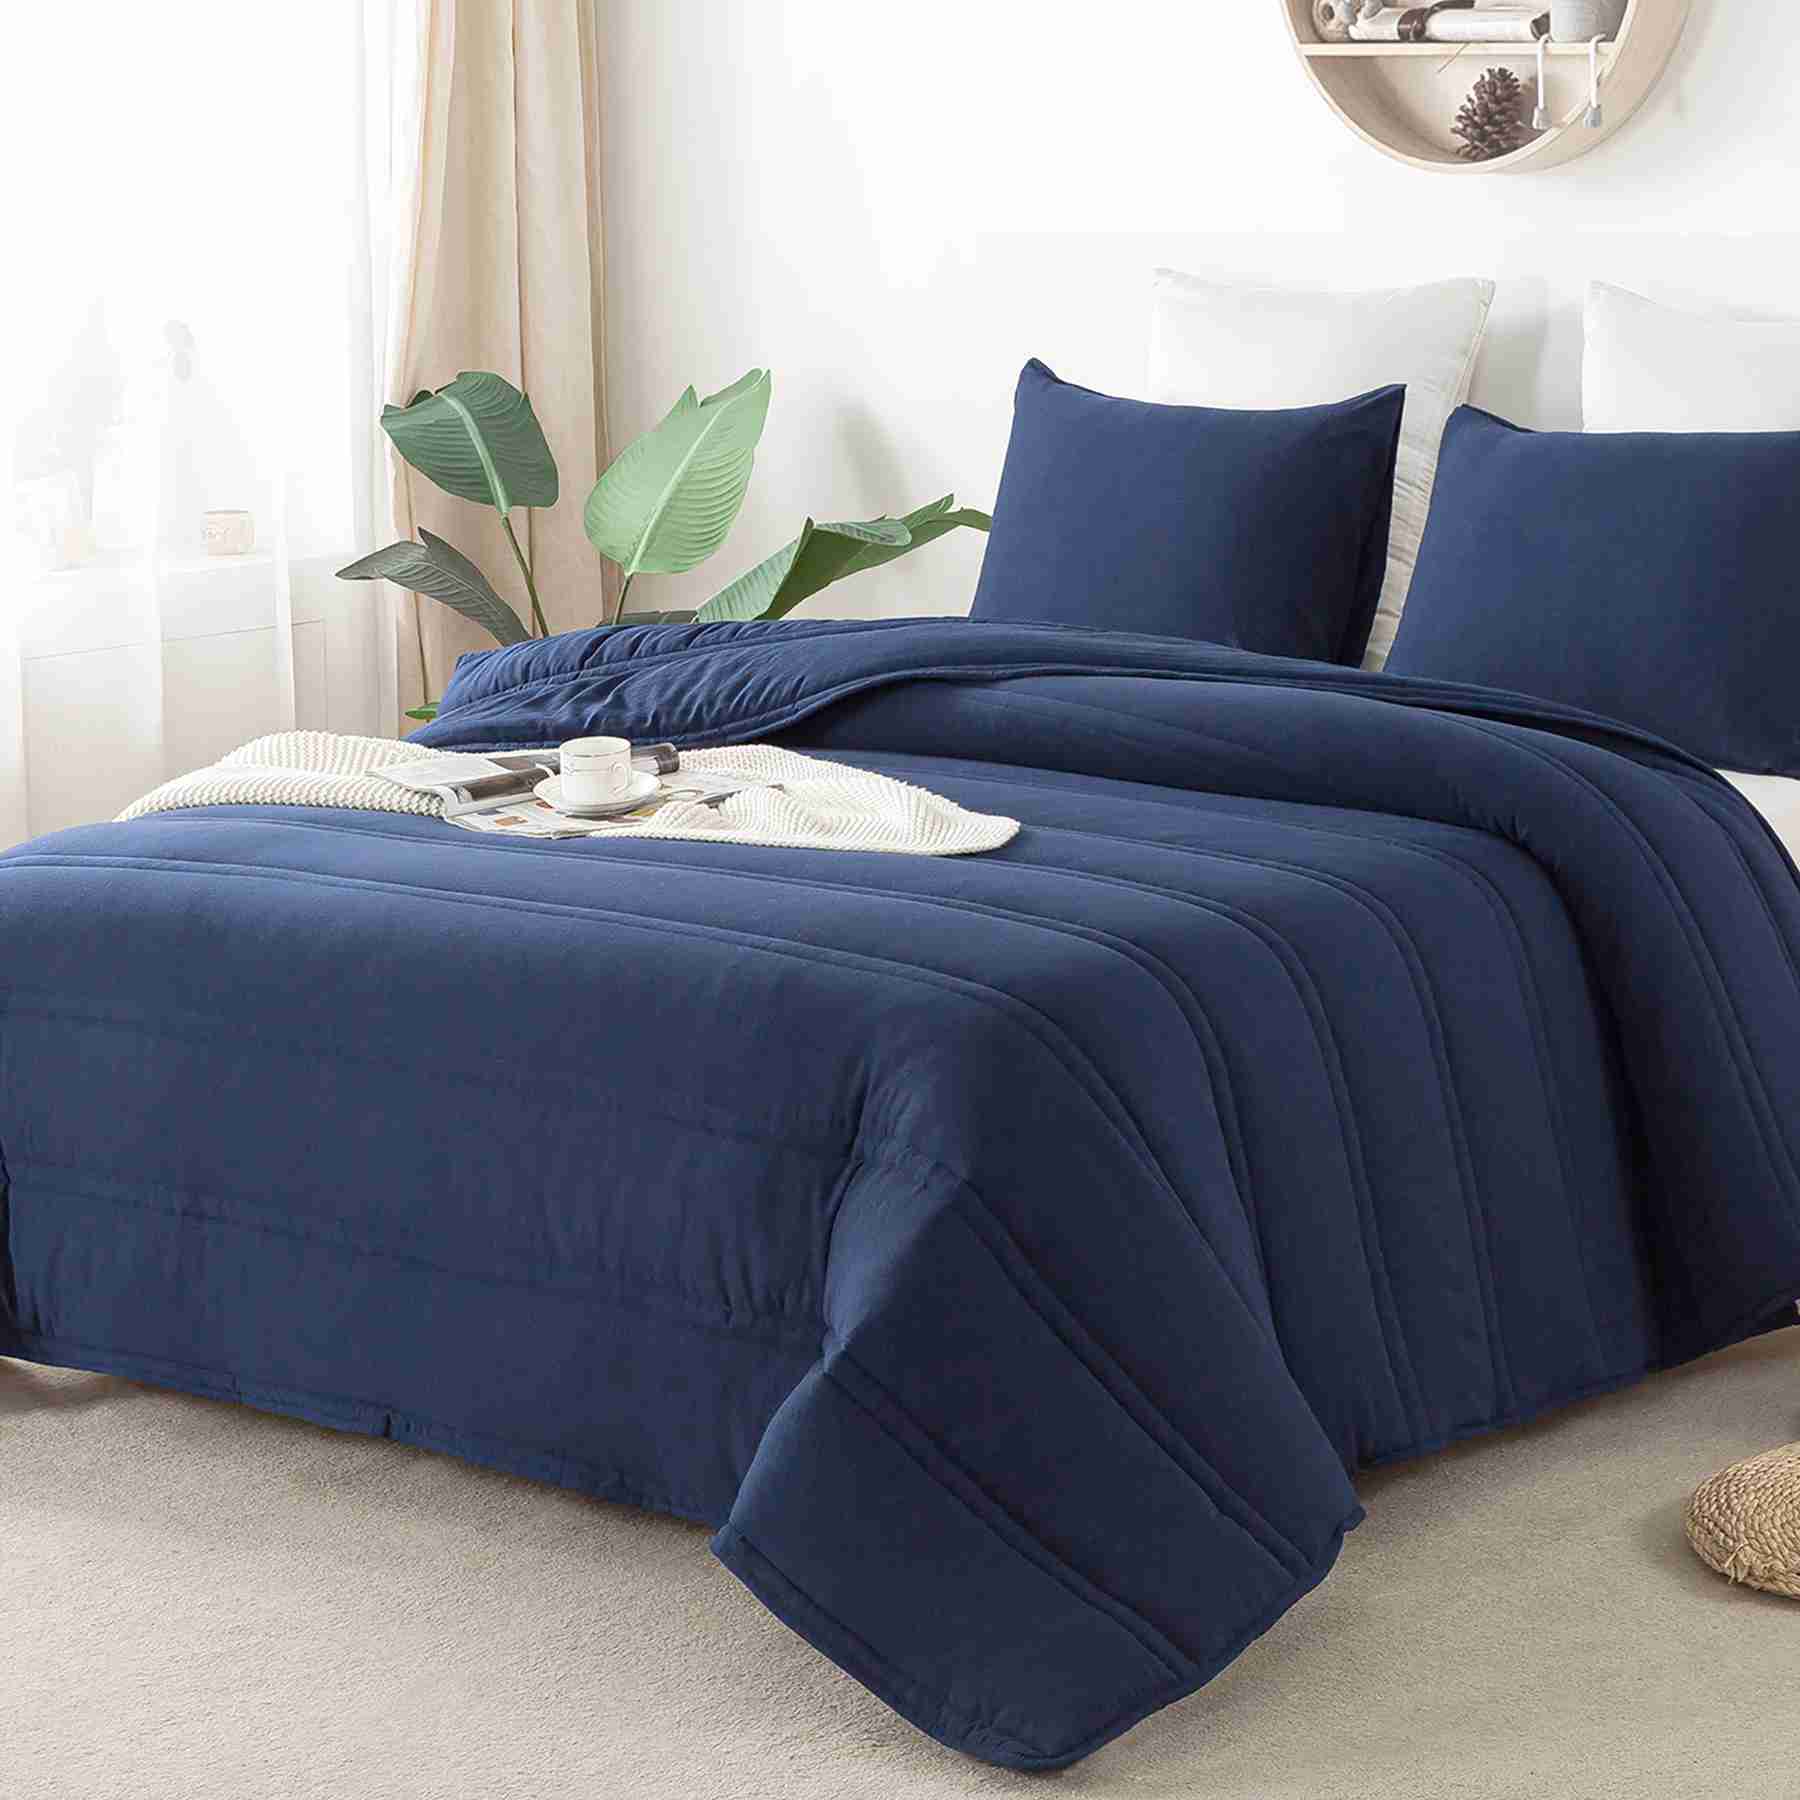 comforter-set-queen-size with cash back rebate